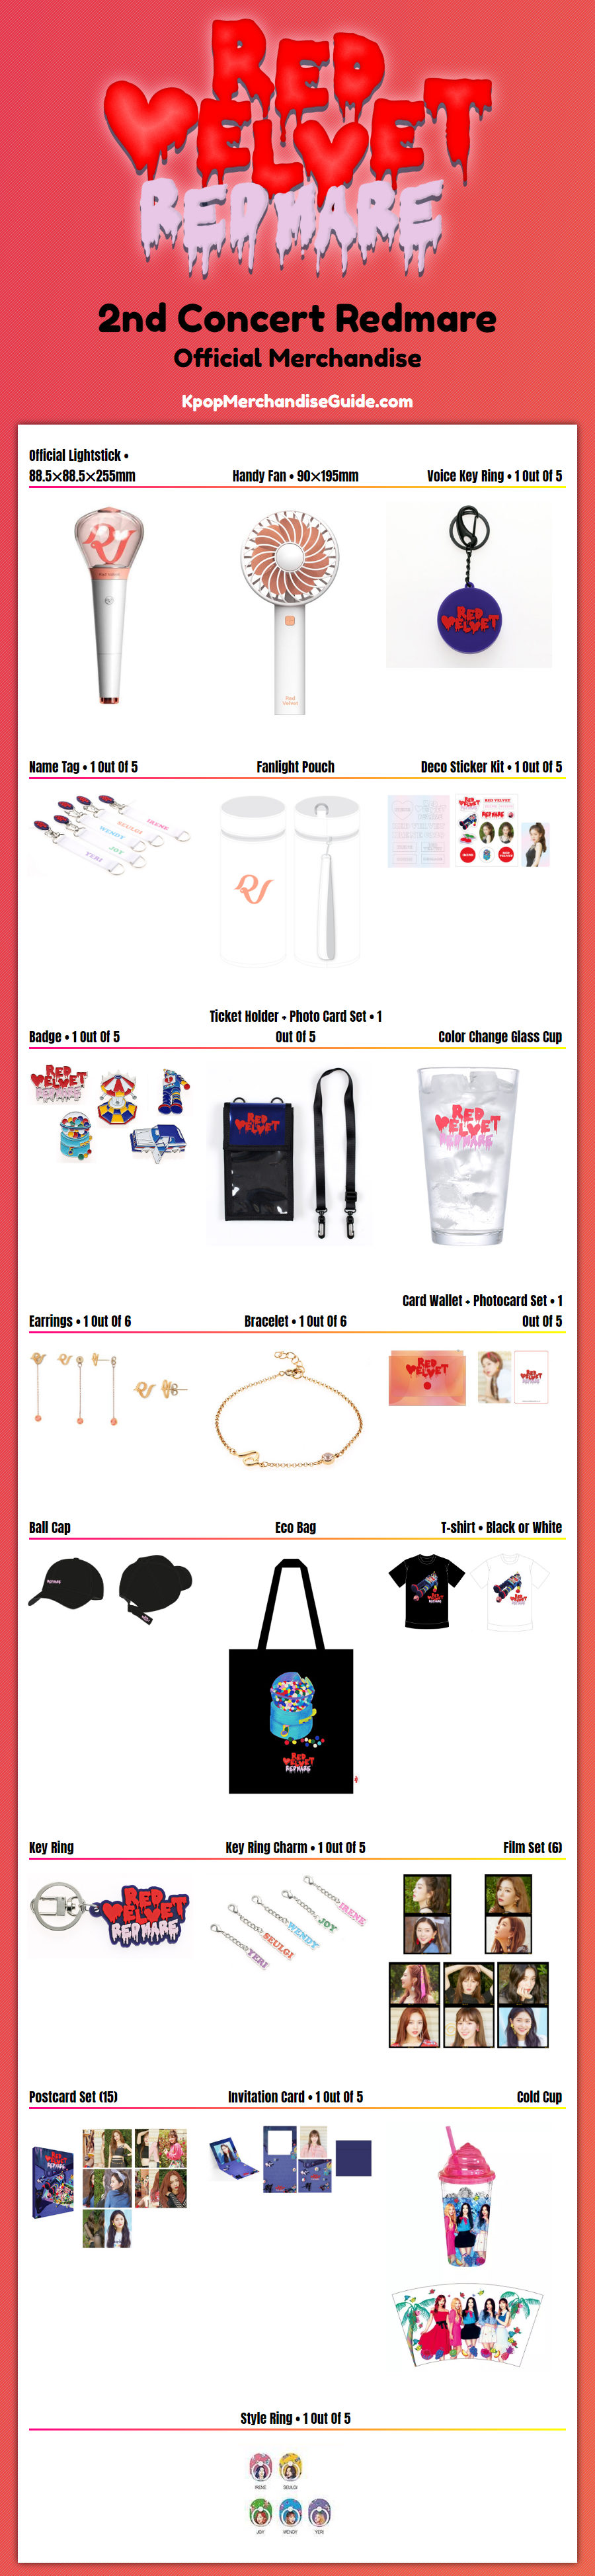 Red Velvet 2nd Concert Redmare Merchandise